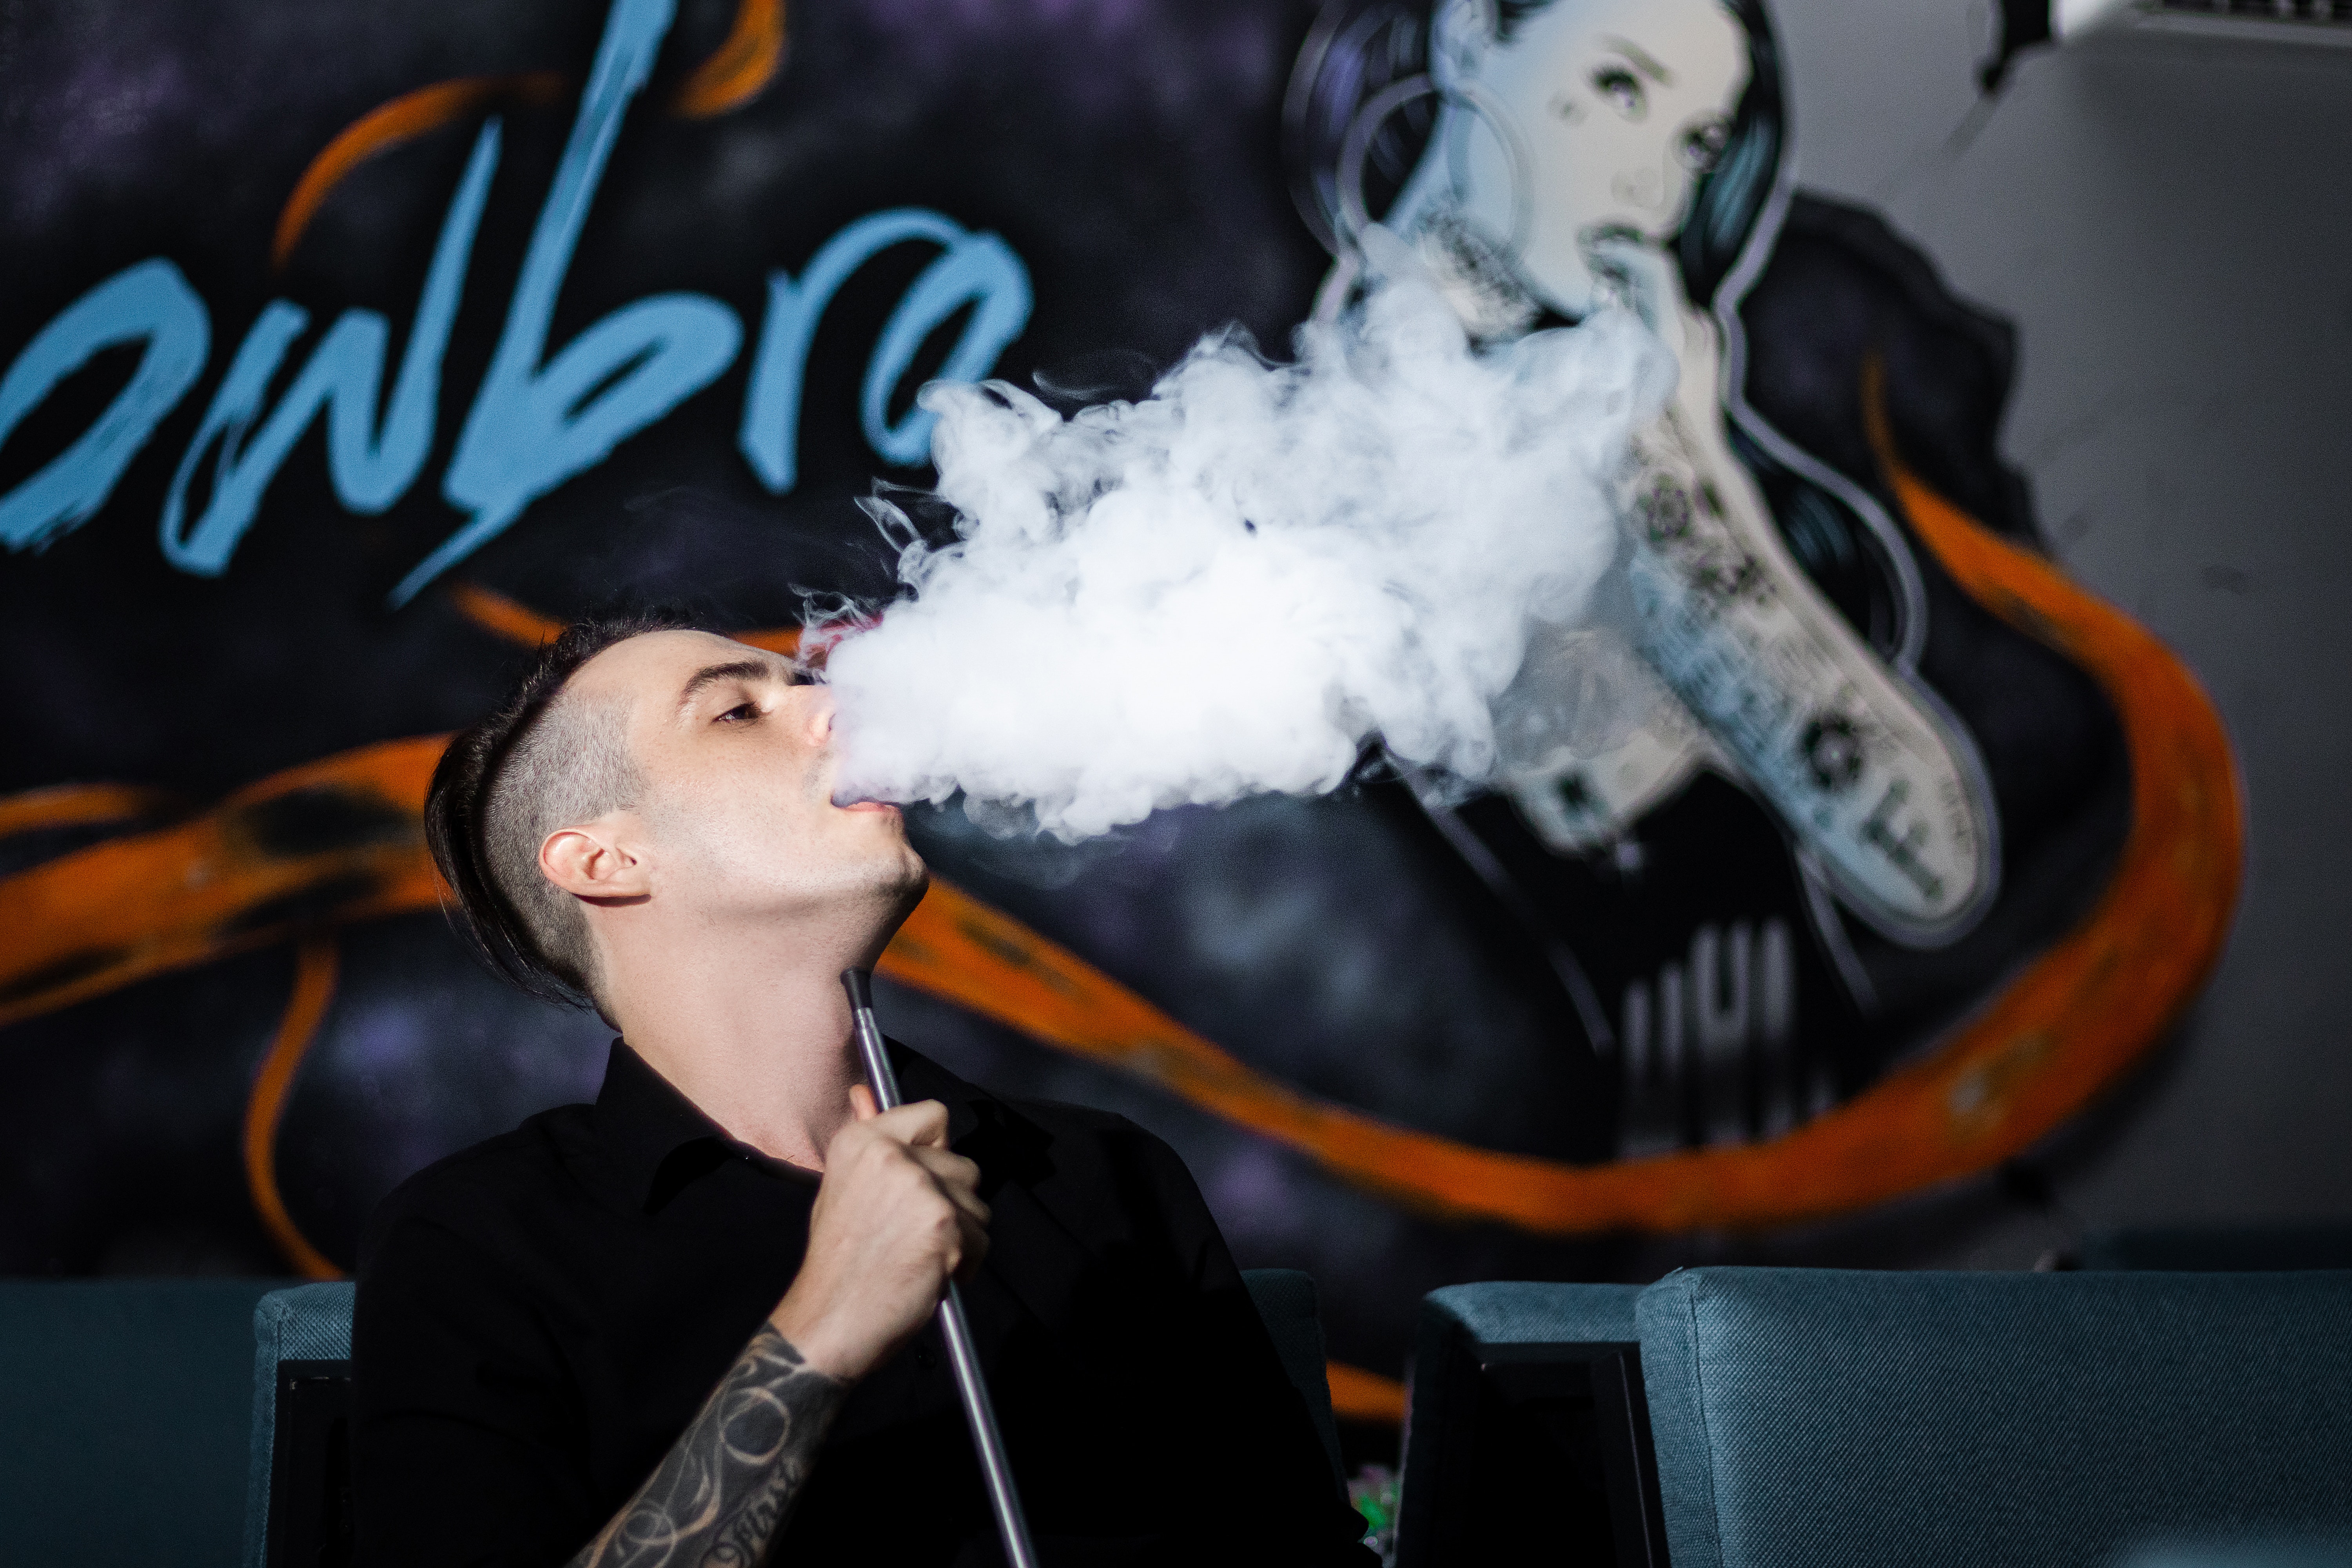 Trump Administration Announces Plan to Ban Flavored E-Cigarettes